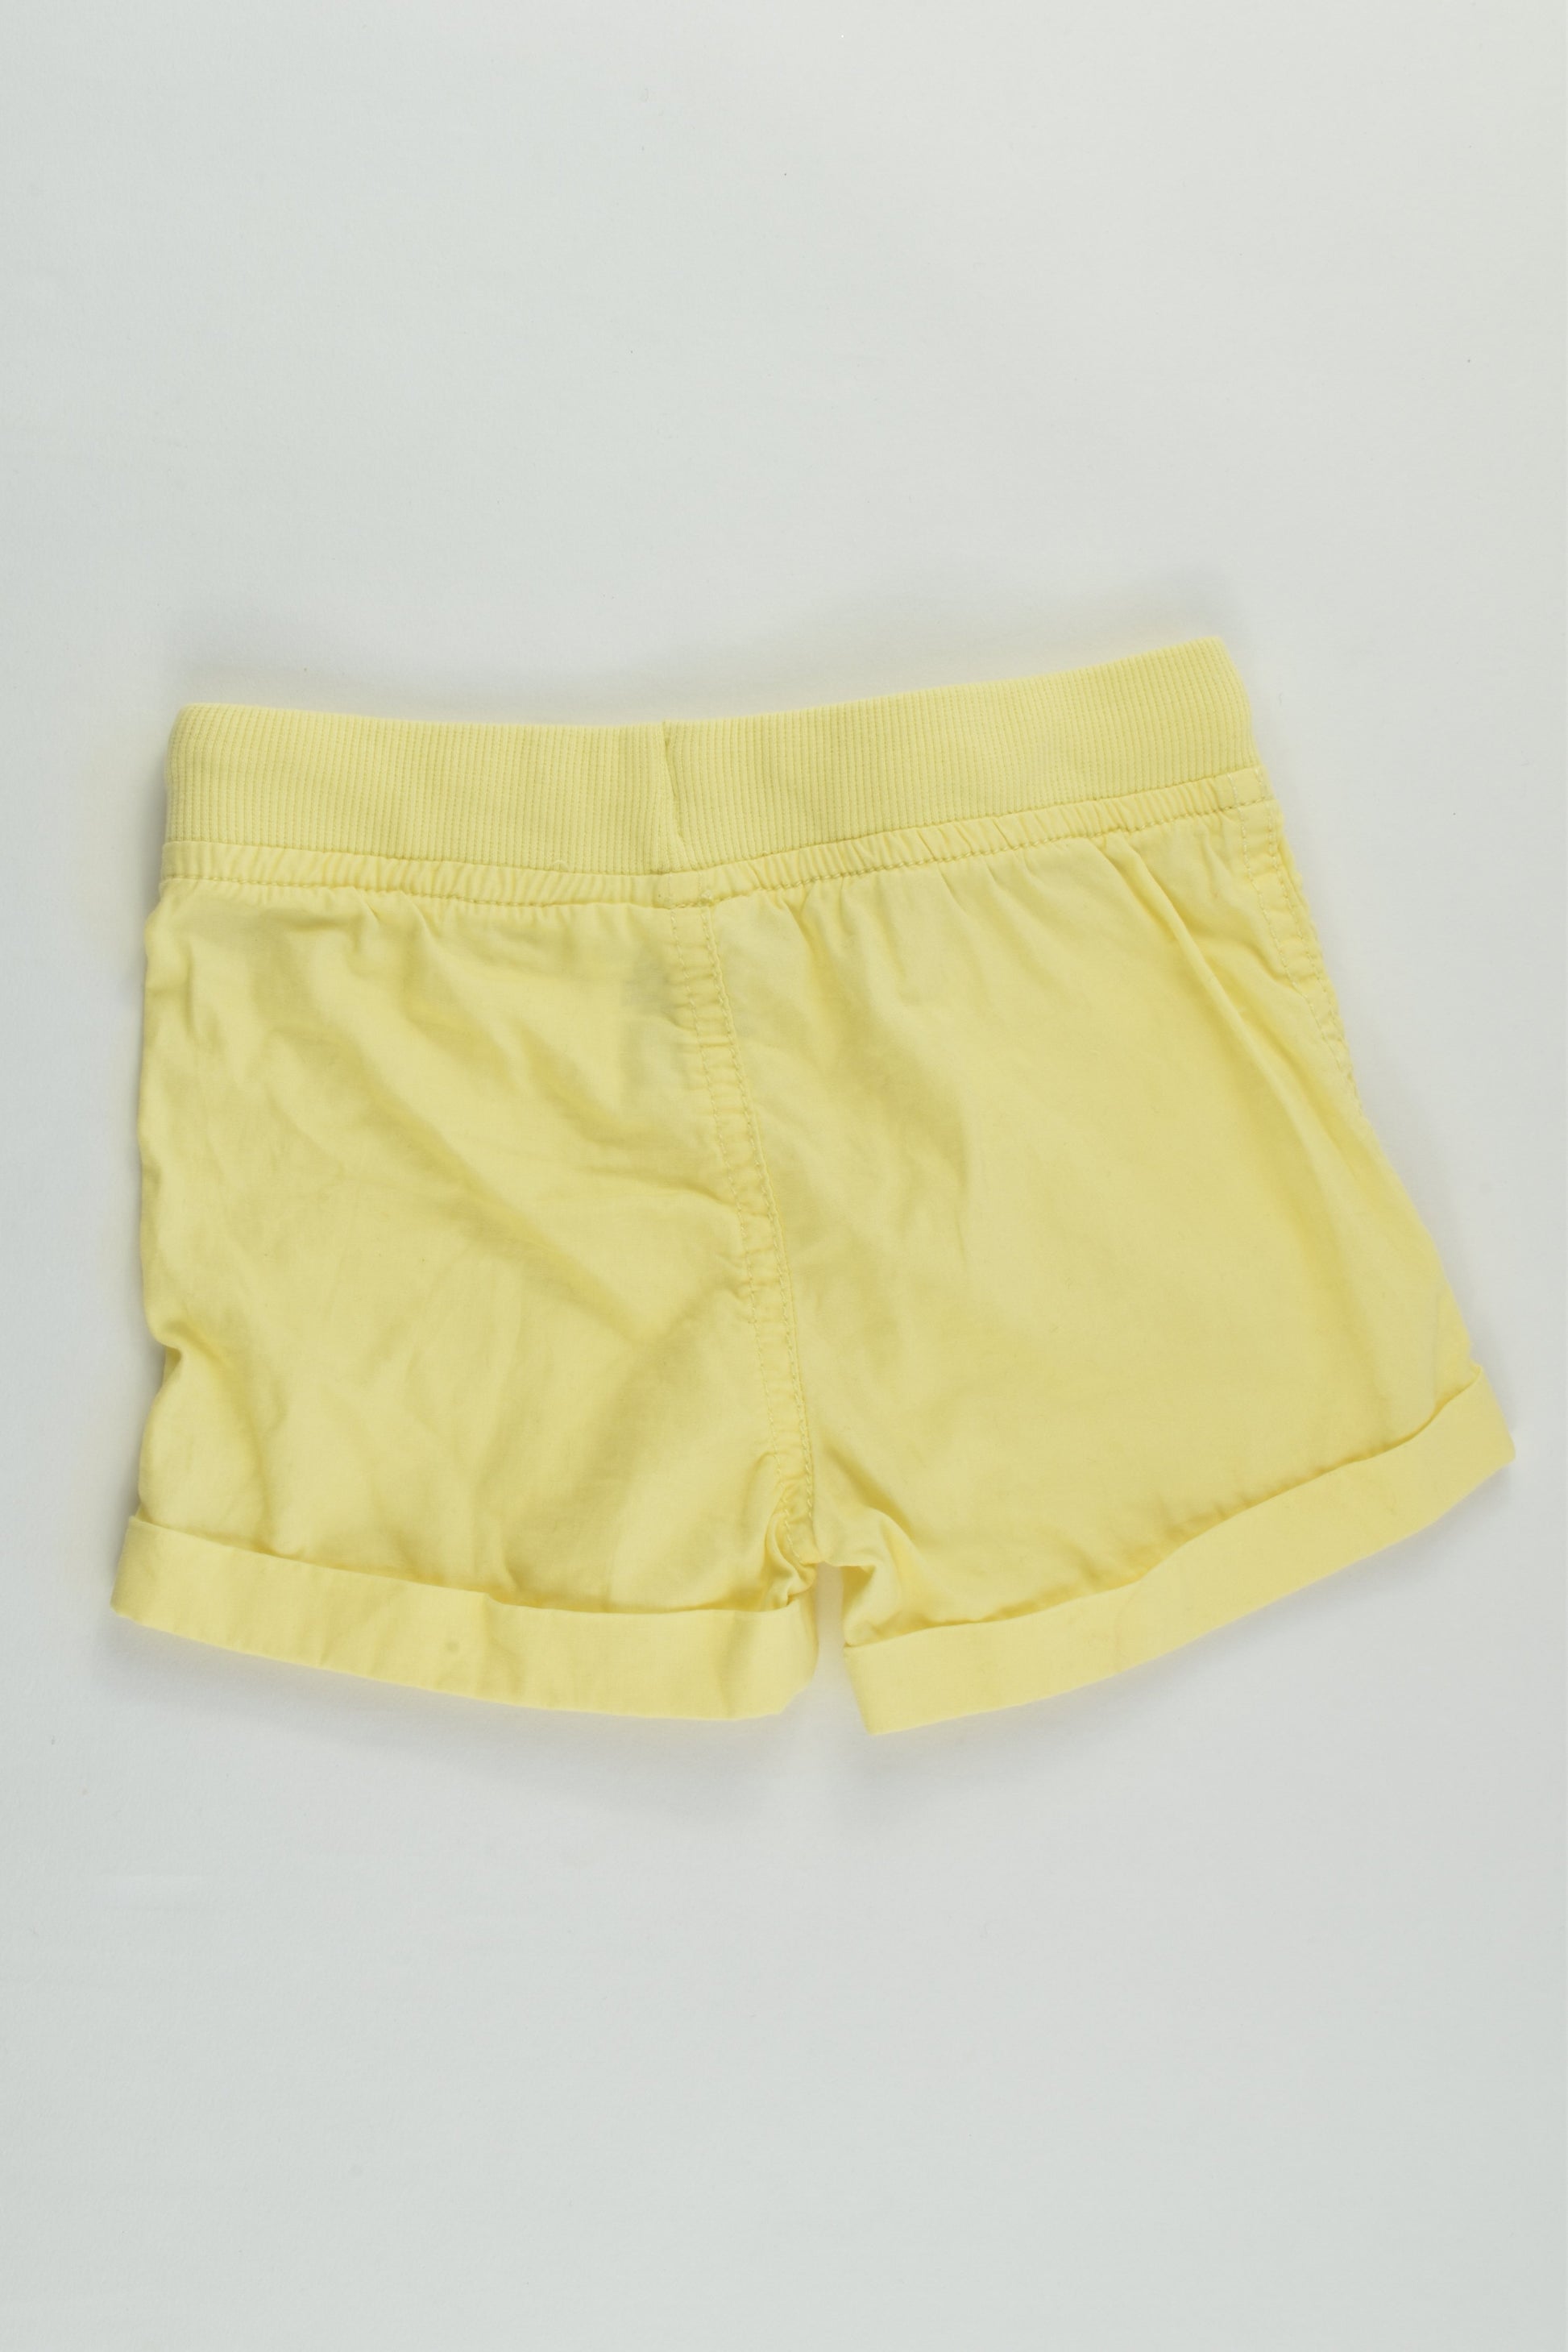 Zeb Size 0 (9-12 months) Lightweight Shorts